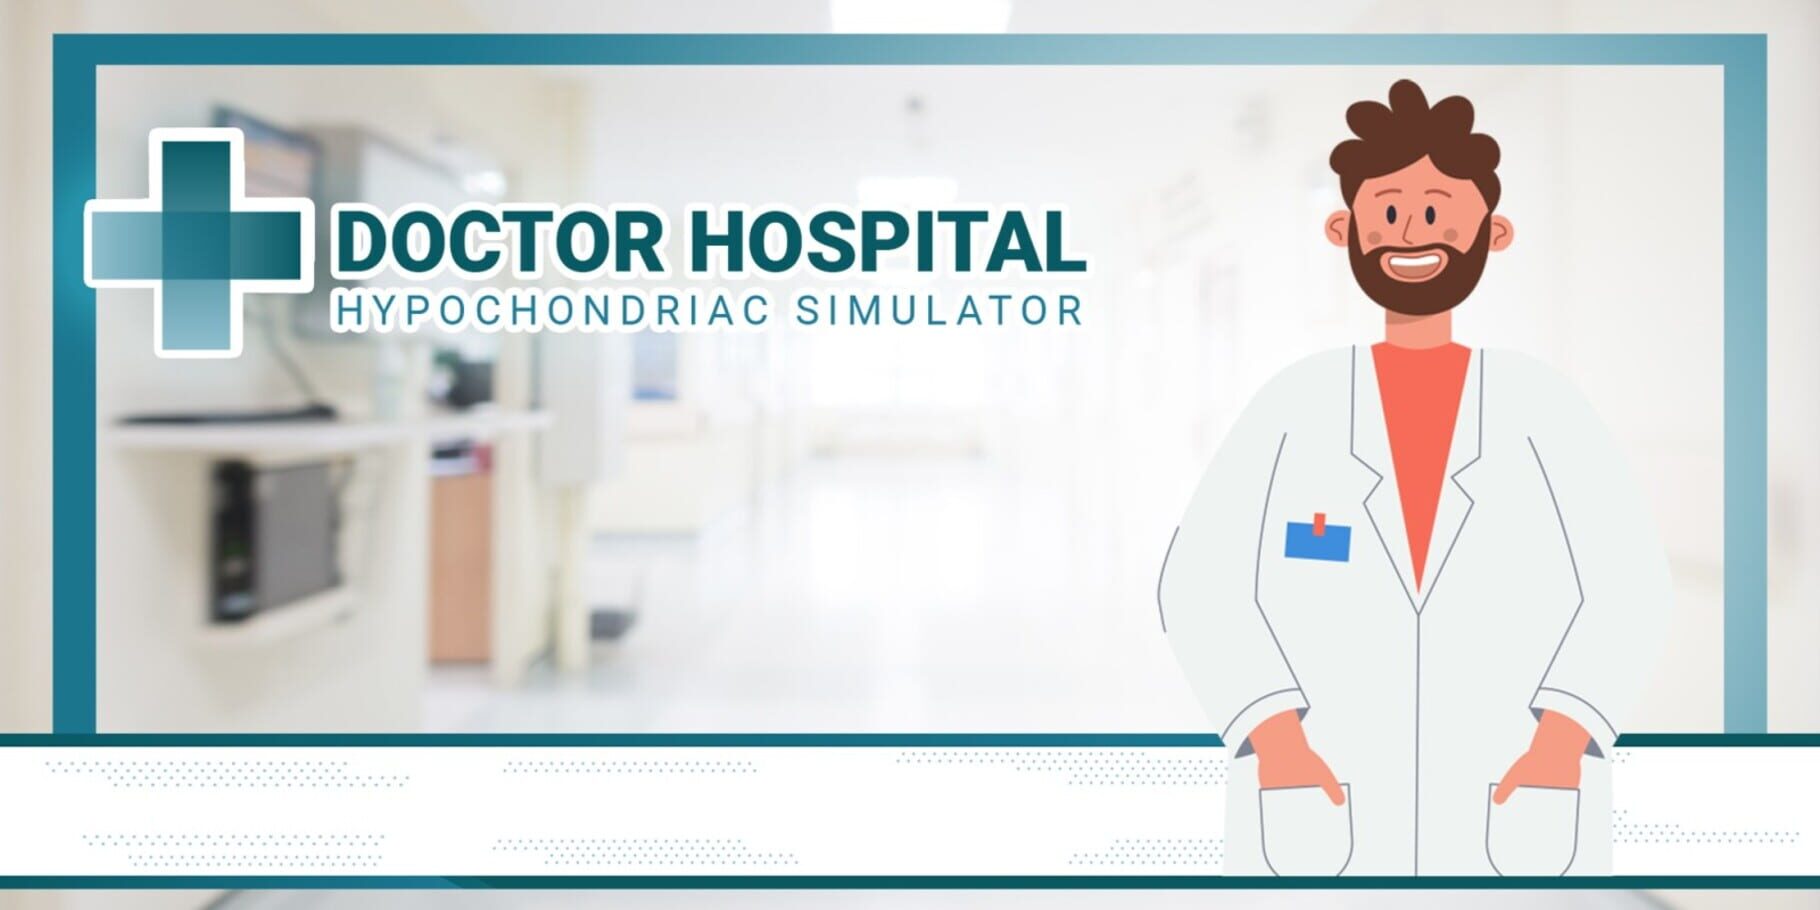 Doctor Hospital: Hypocondriac Simulator artwork